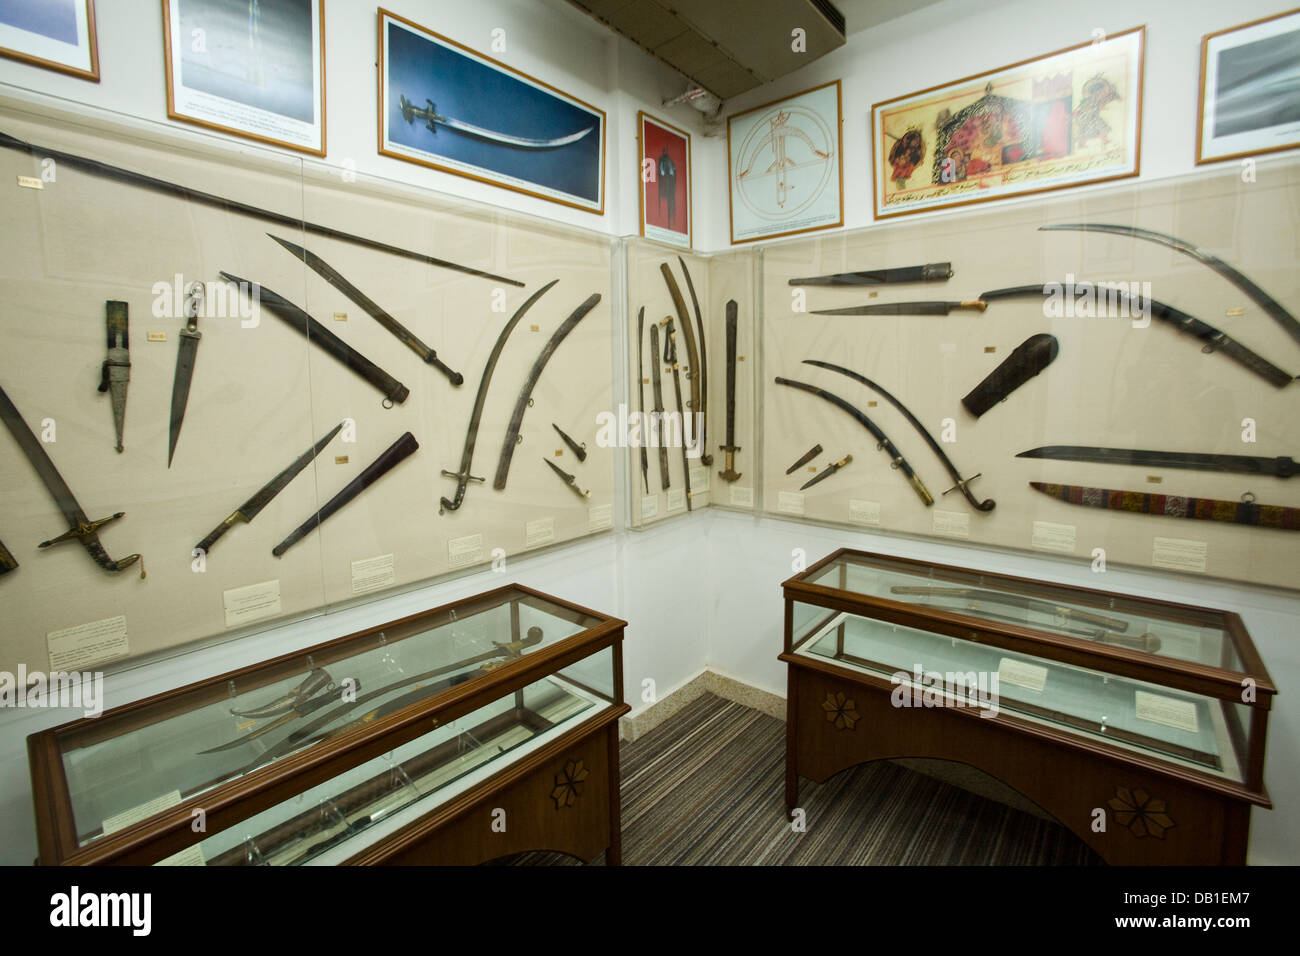 Exhibits, the Al-Tayibat City Museum of International Civilisation, Jeddah, Saudi Arabia. Stock Photo